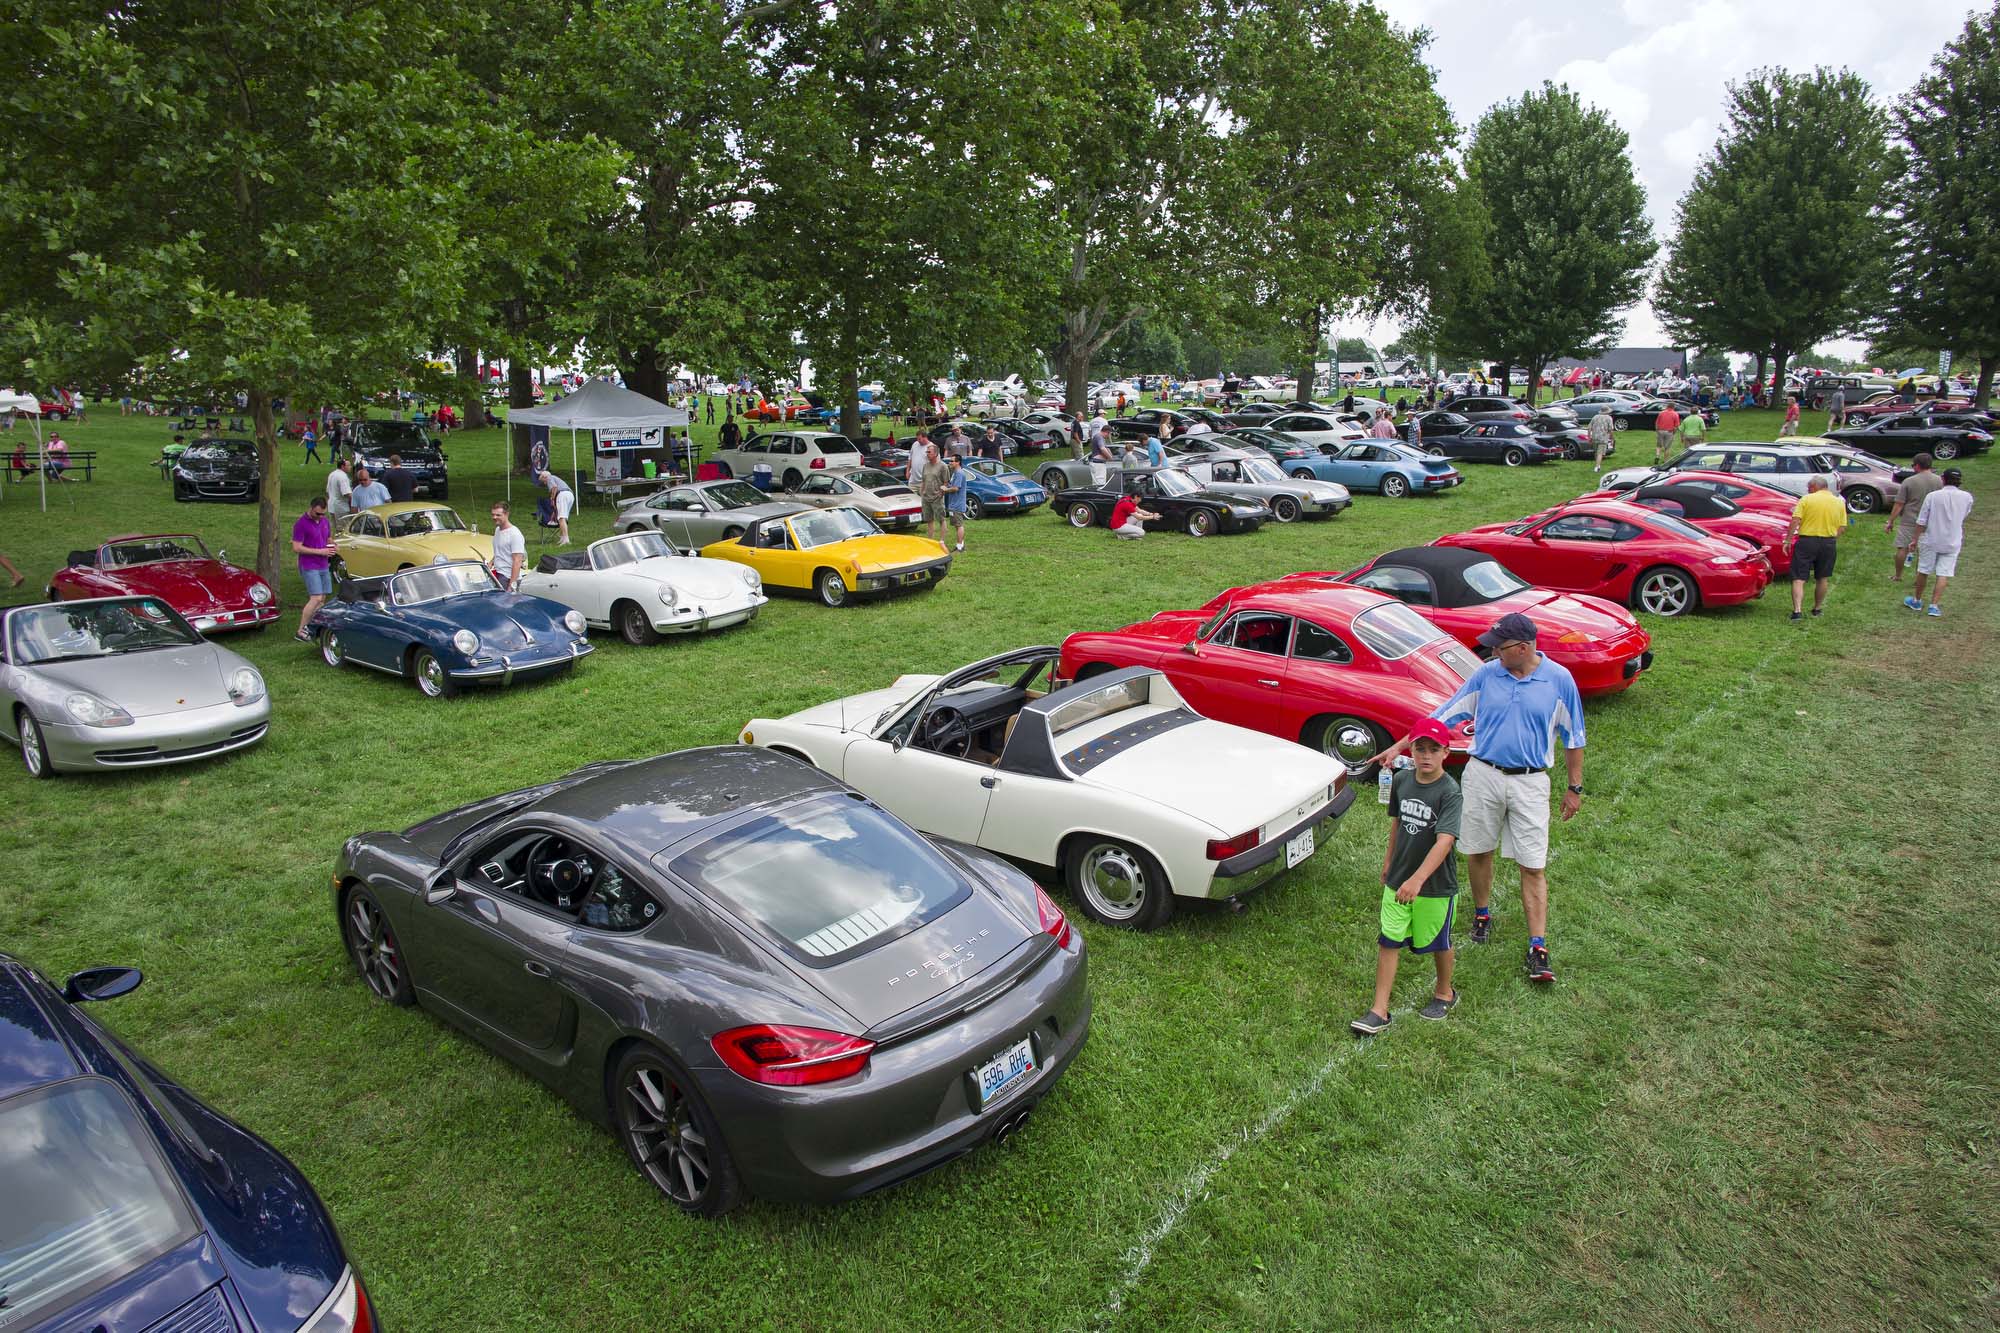 2015 Keeneland Concours d.Elegance.
Porsche Club of America (Bluegrass Region) Paddock.


Photo by Joseph Rey Au